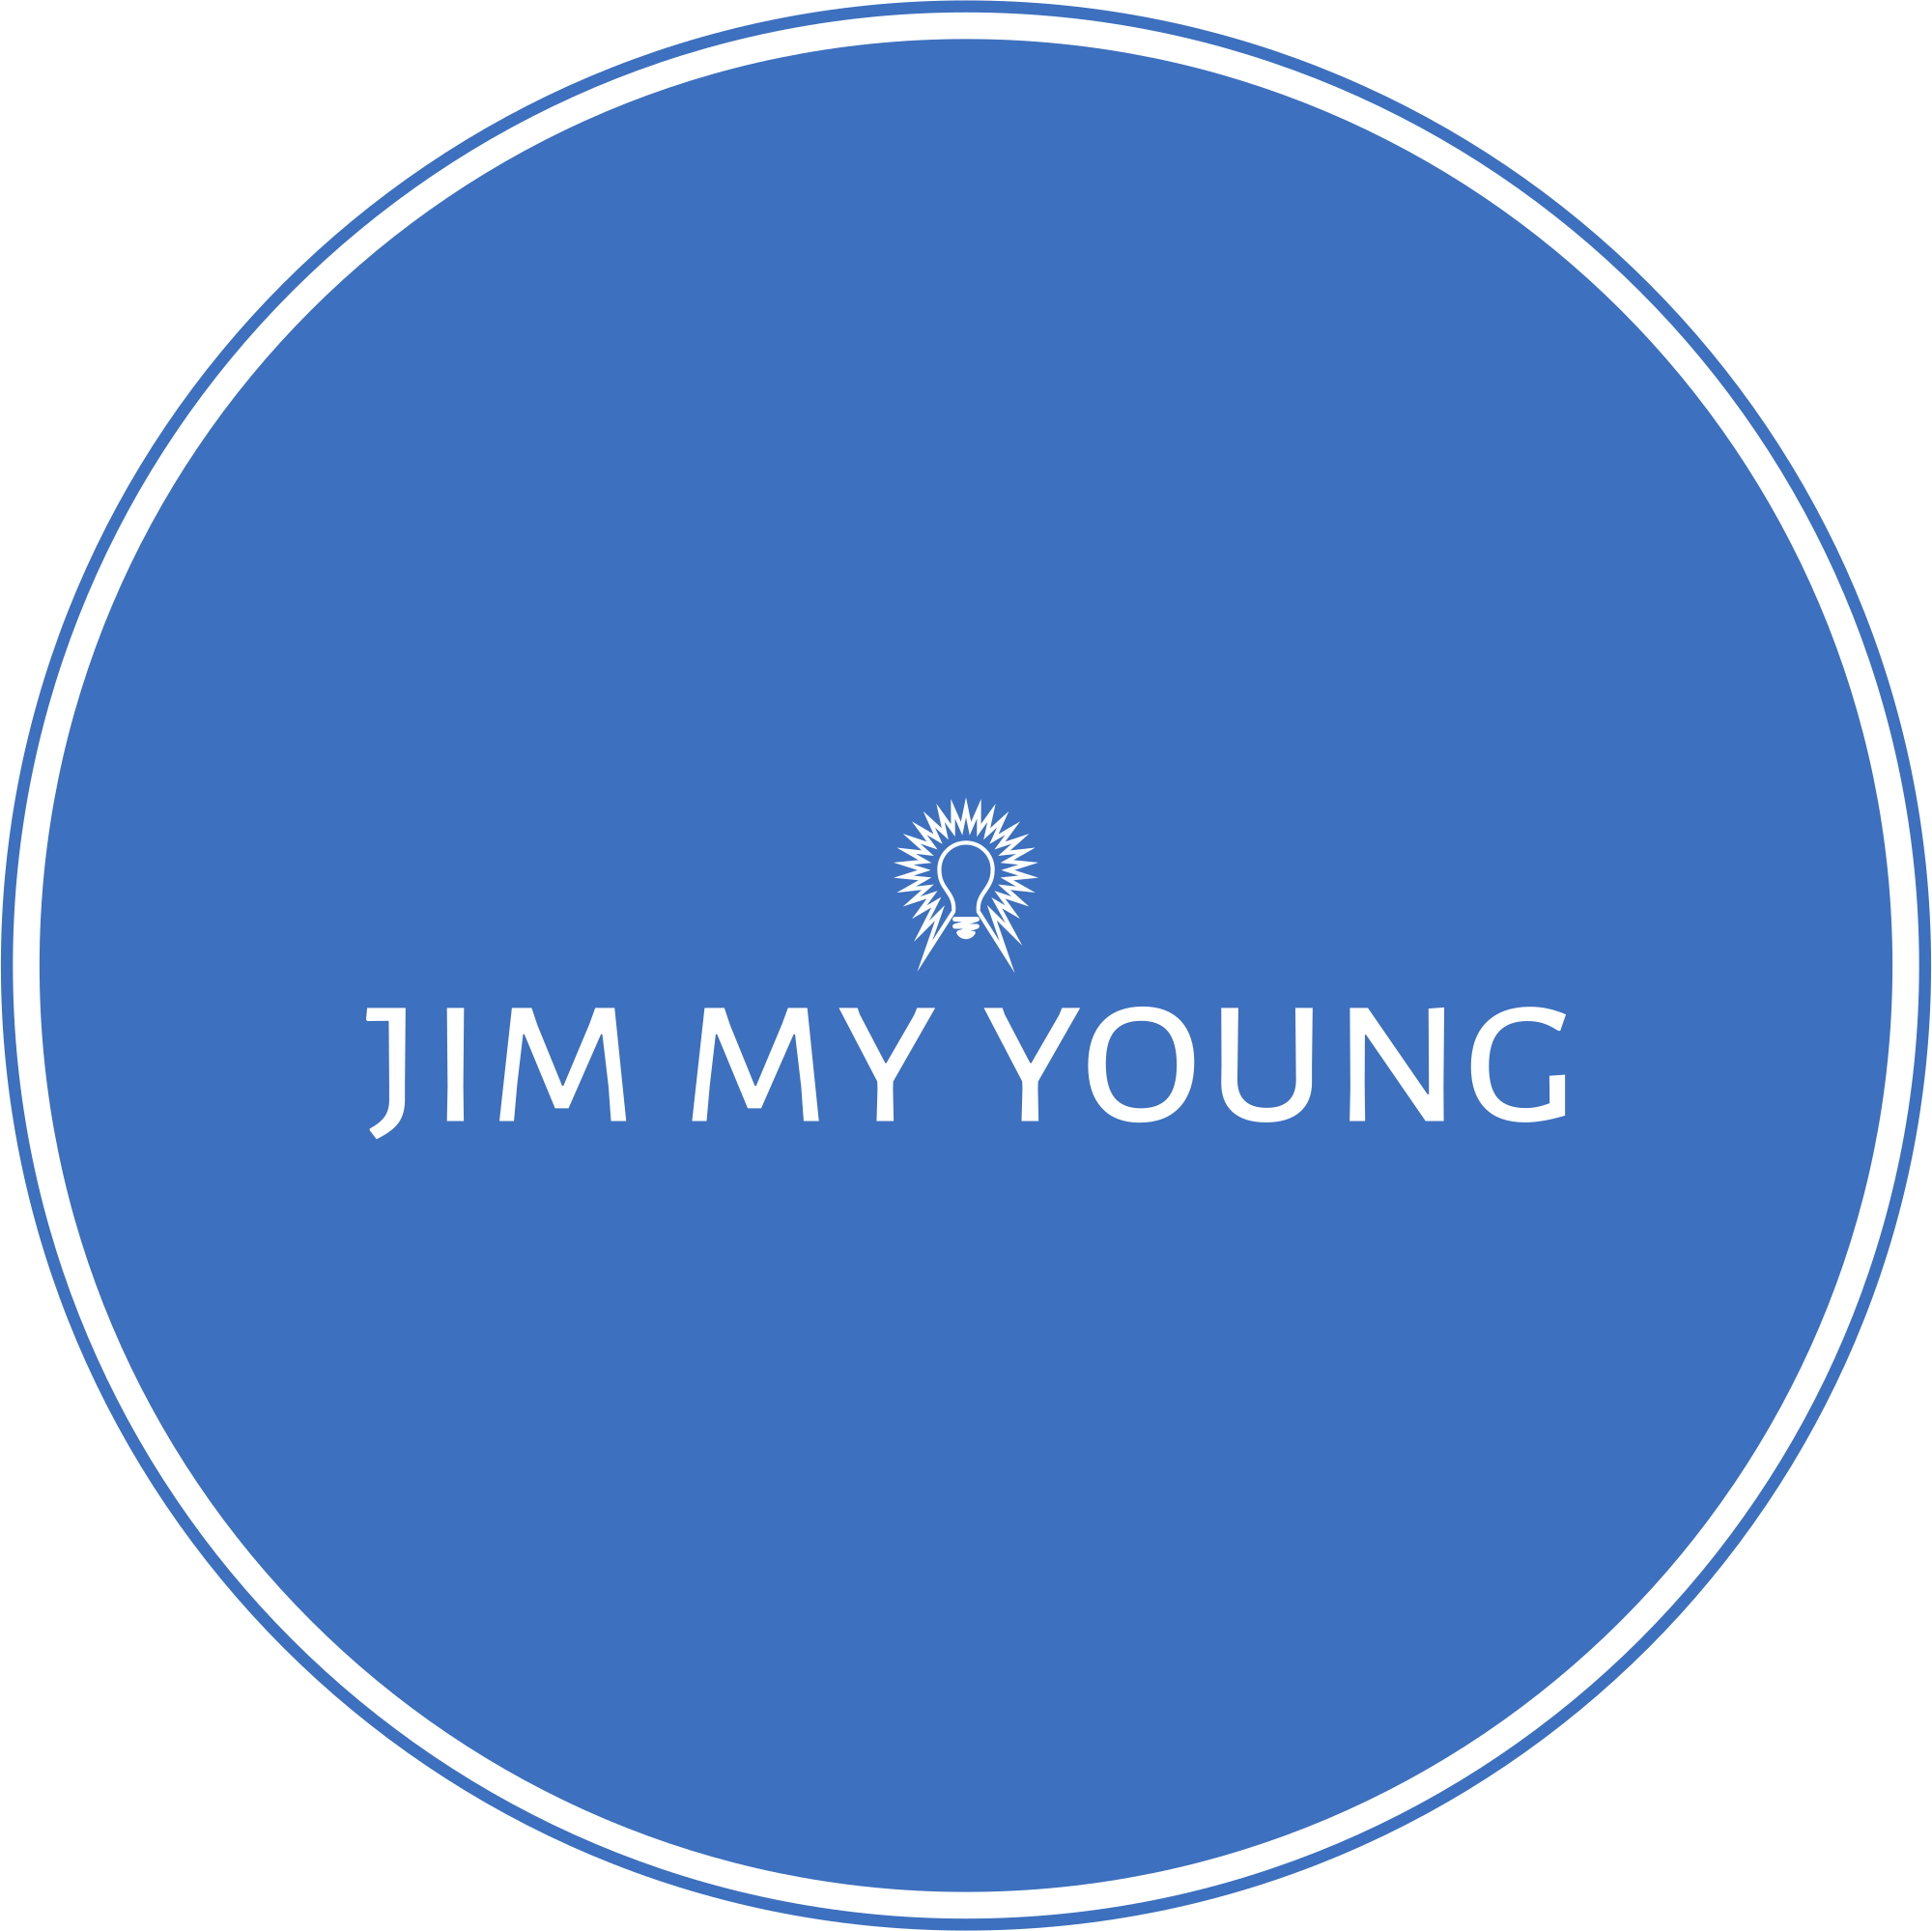 Jimmyyoung dark logo